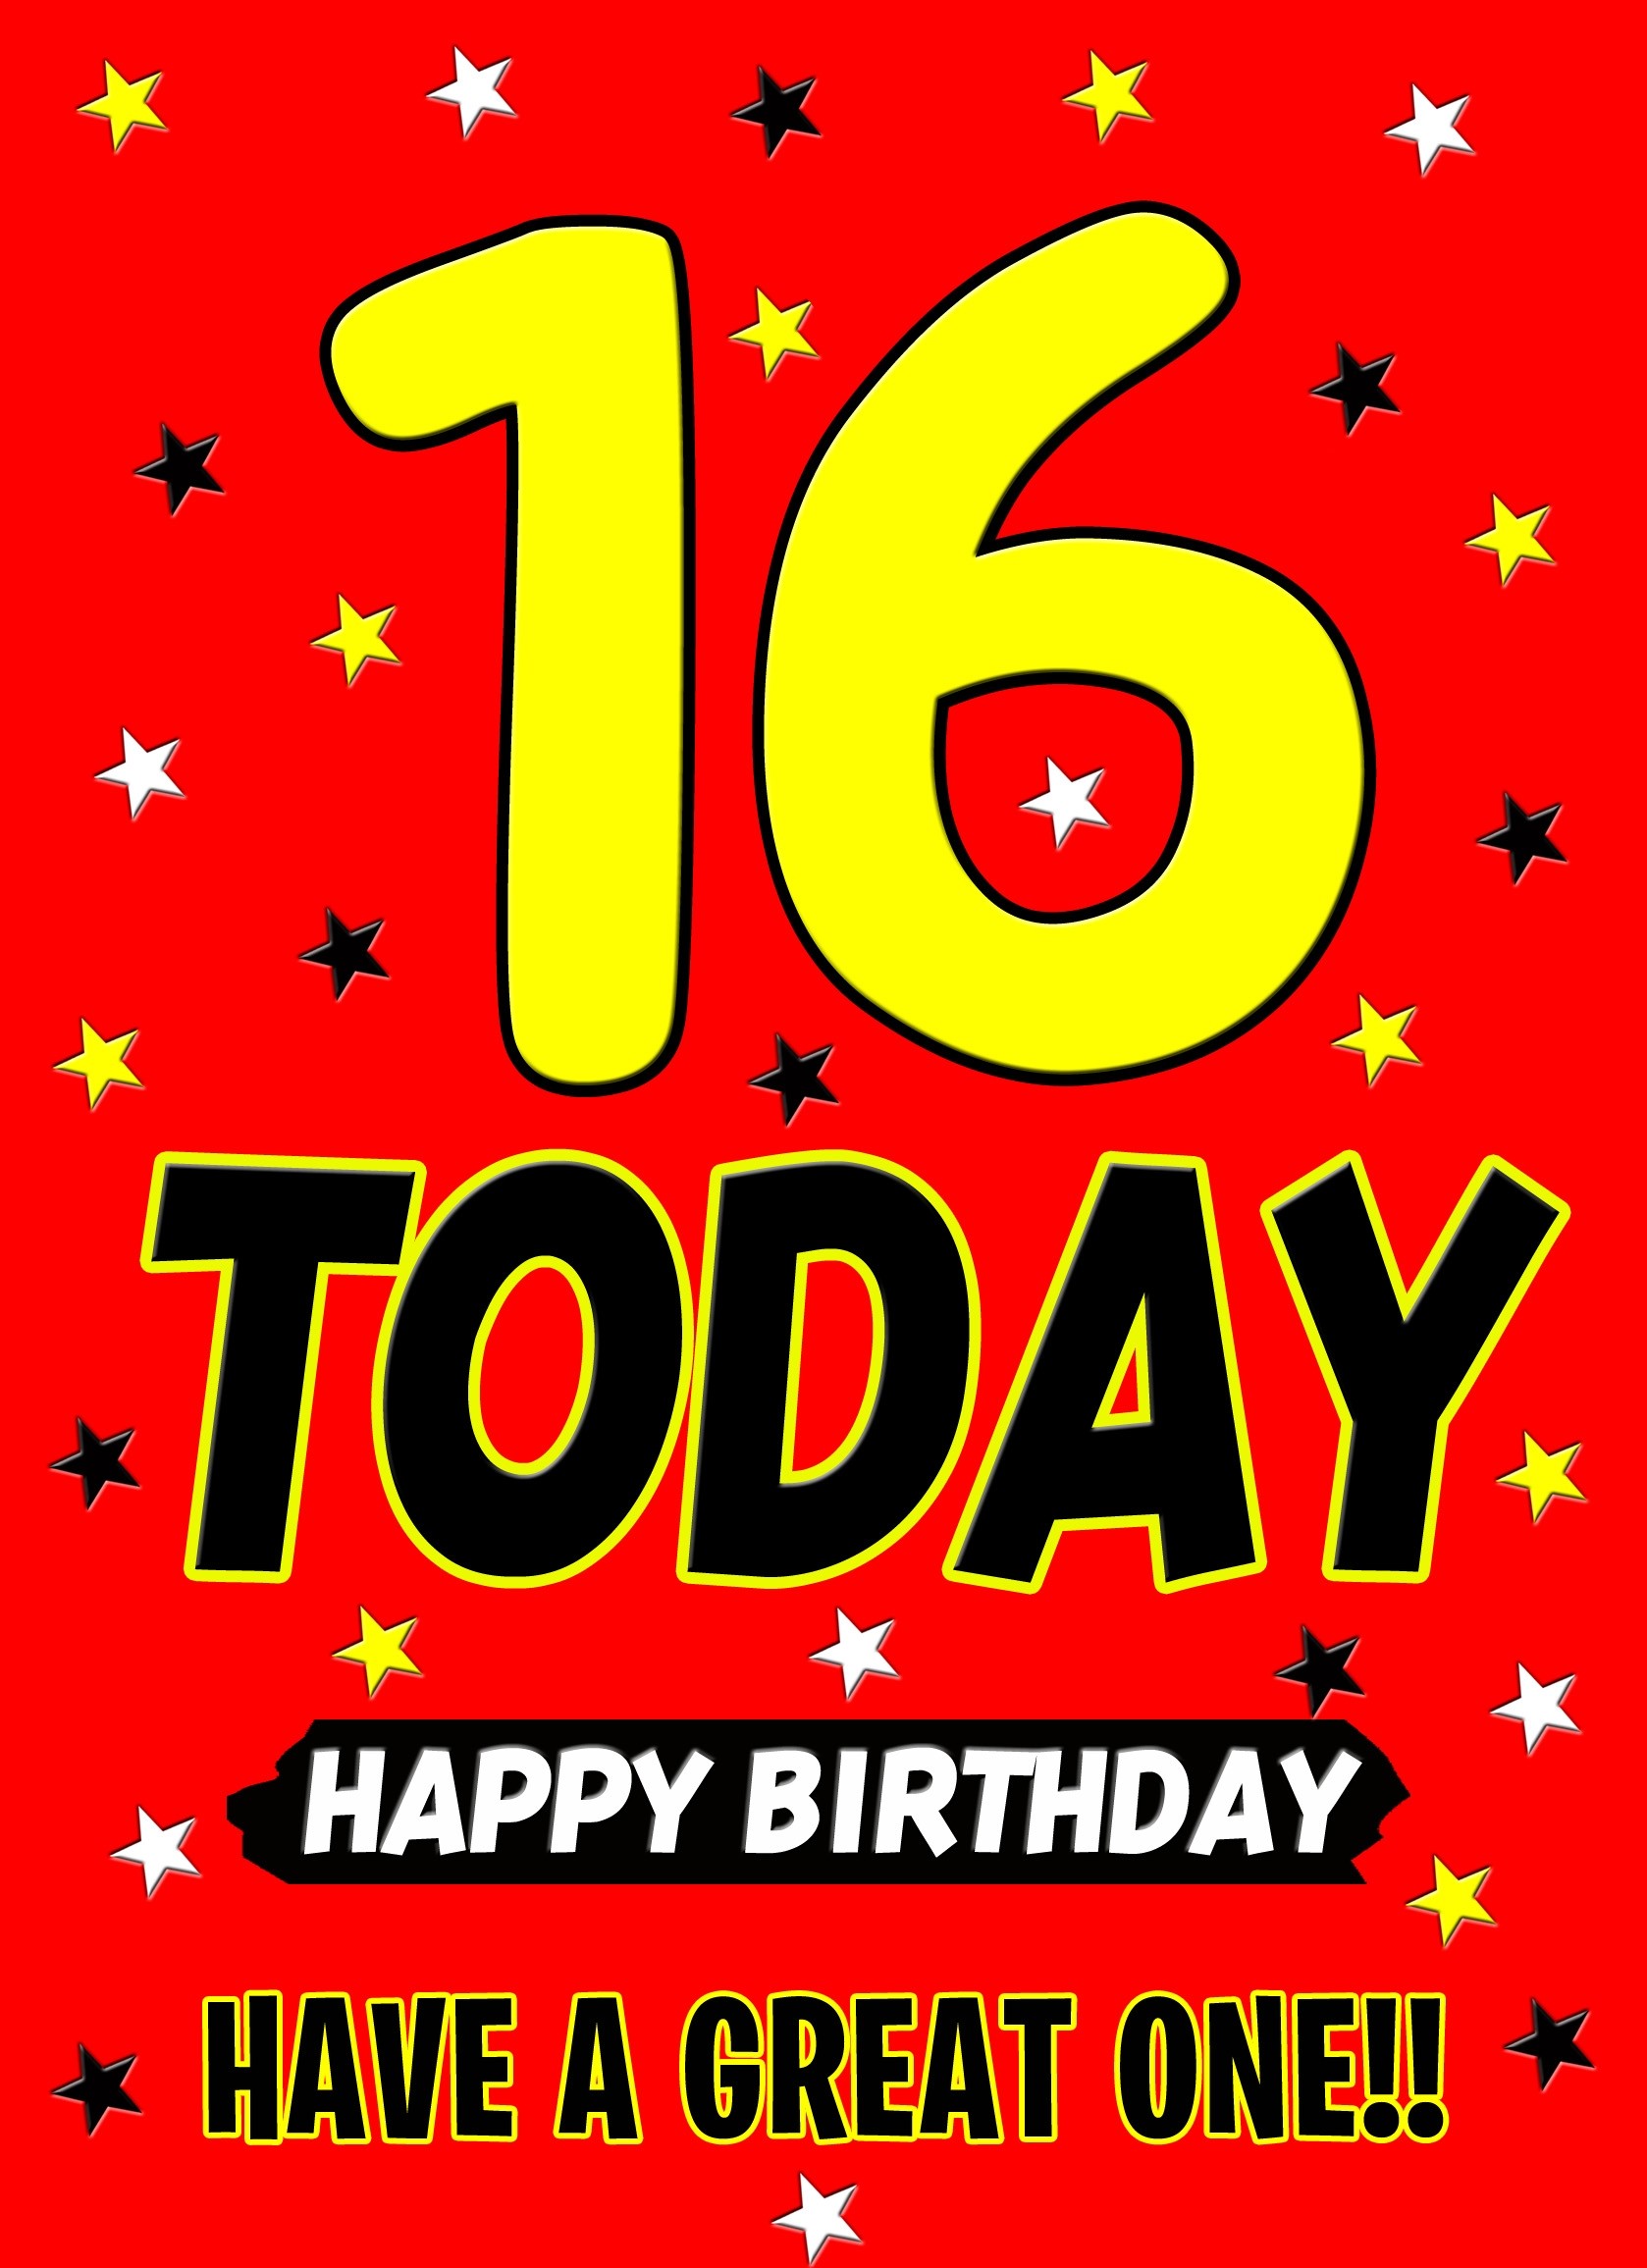 16 Today Birthday Card